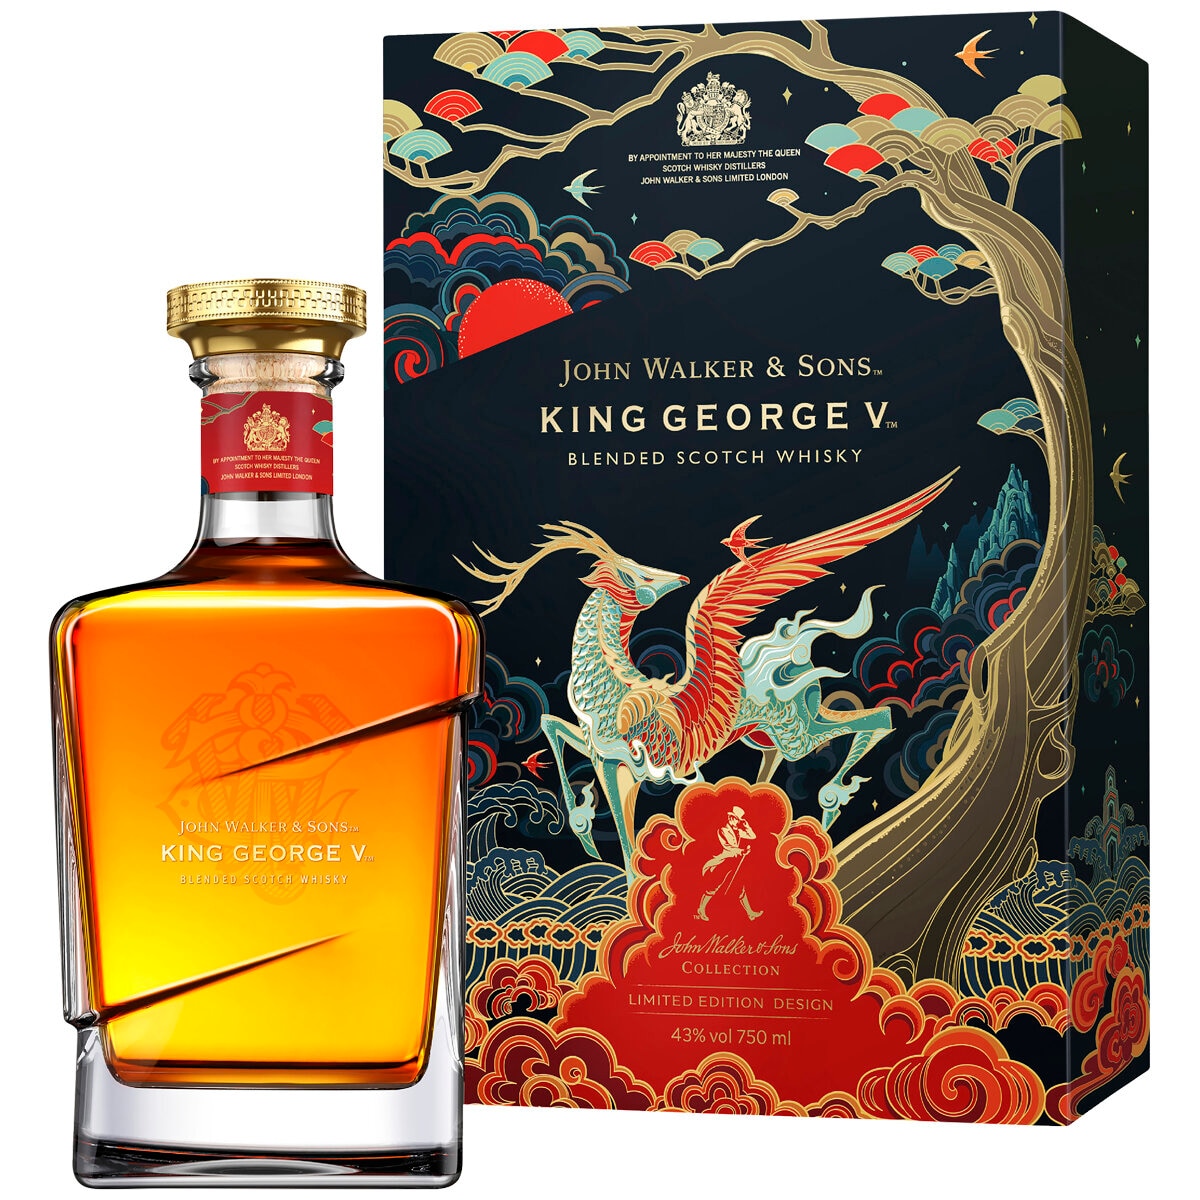 John Walker & Sons King George V Blended Scotch Whisky Lunar New Year Limited Edition 750ml